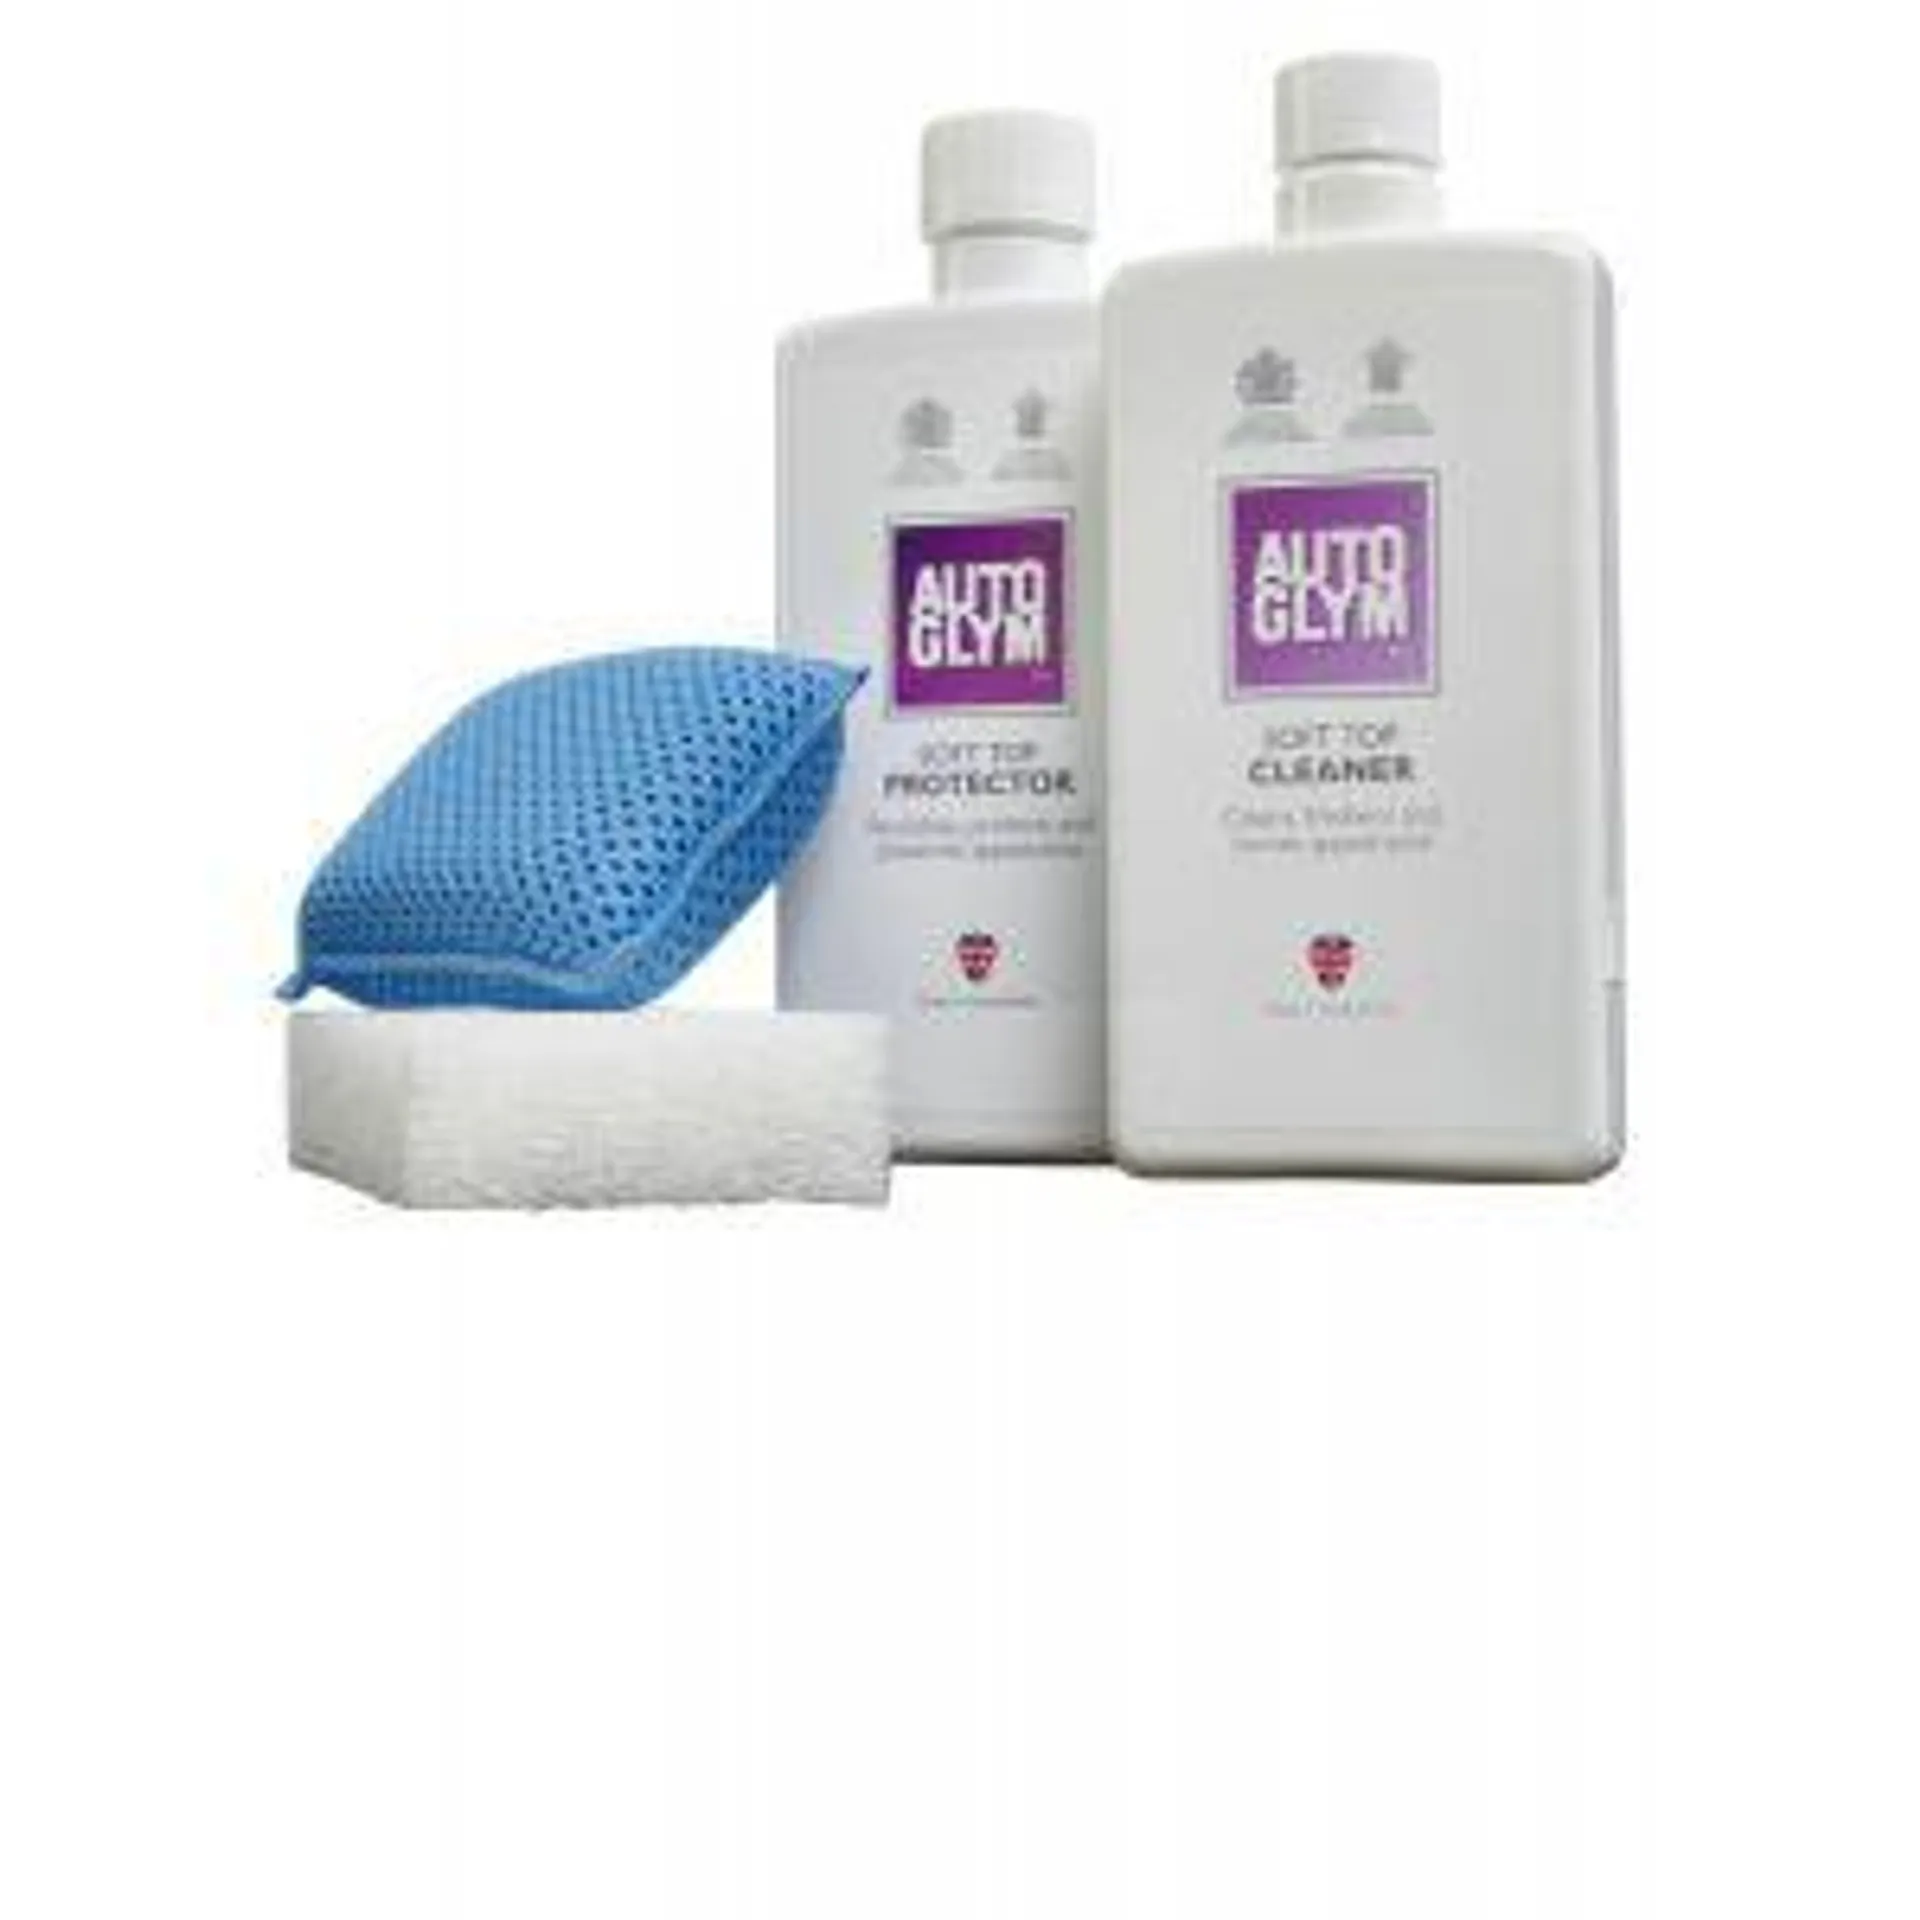 AUTOGLYM soft top clean & protect kit